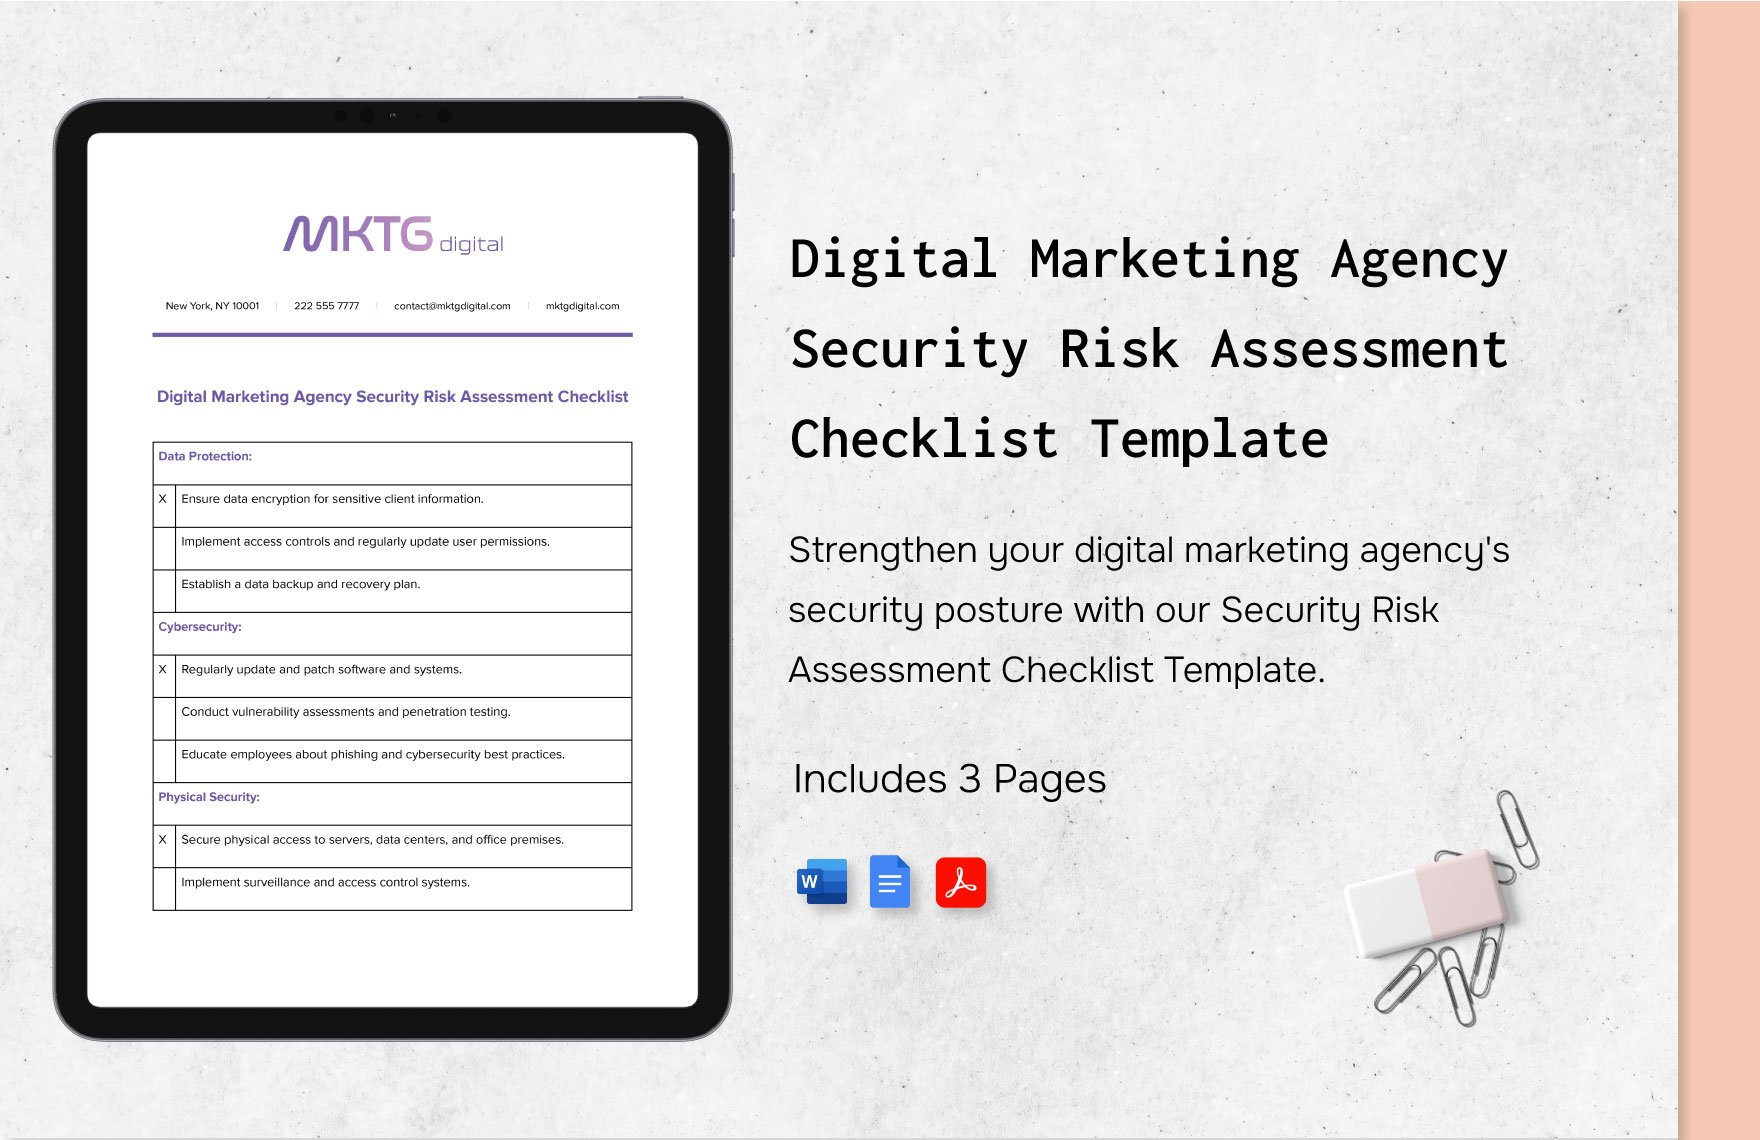 Digital Marketing Agency Security Risk Assessment Checklist Template